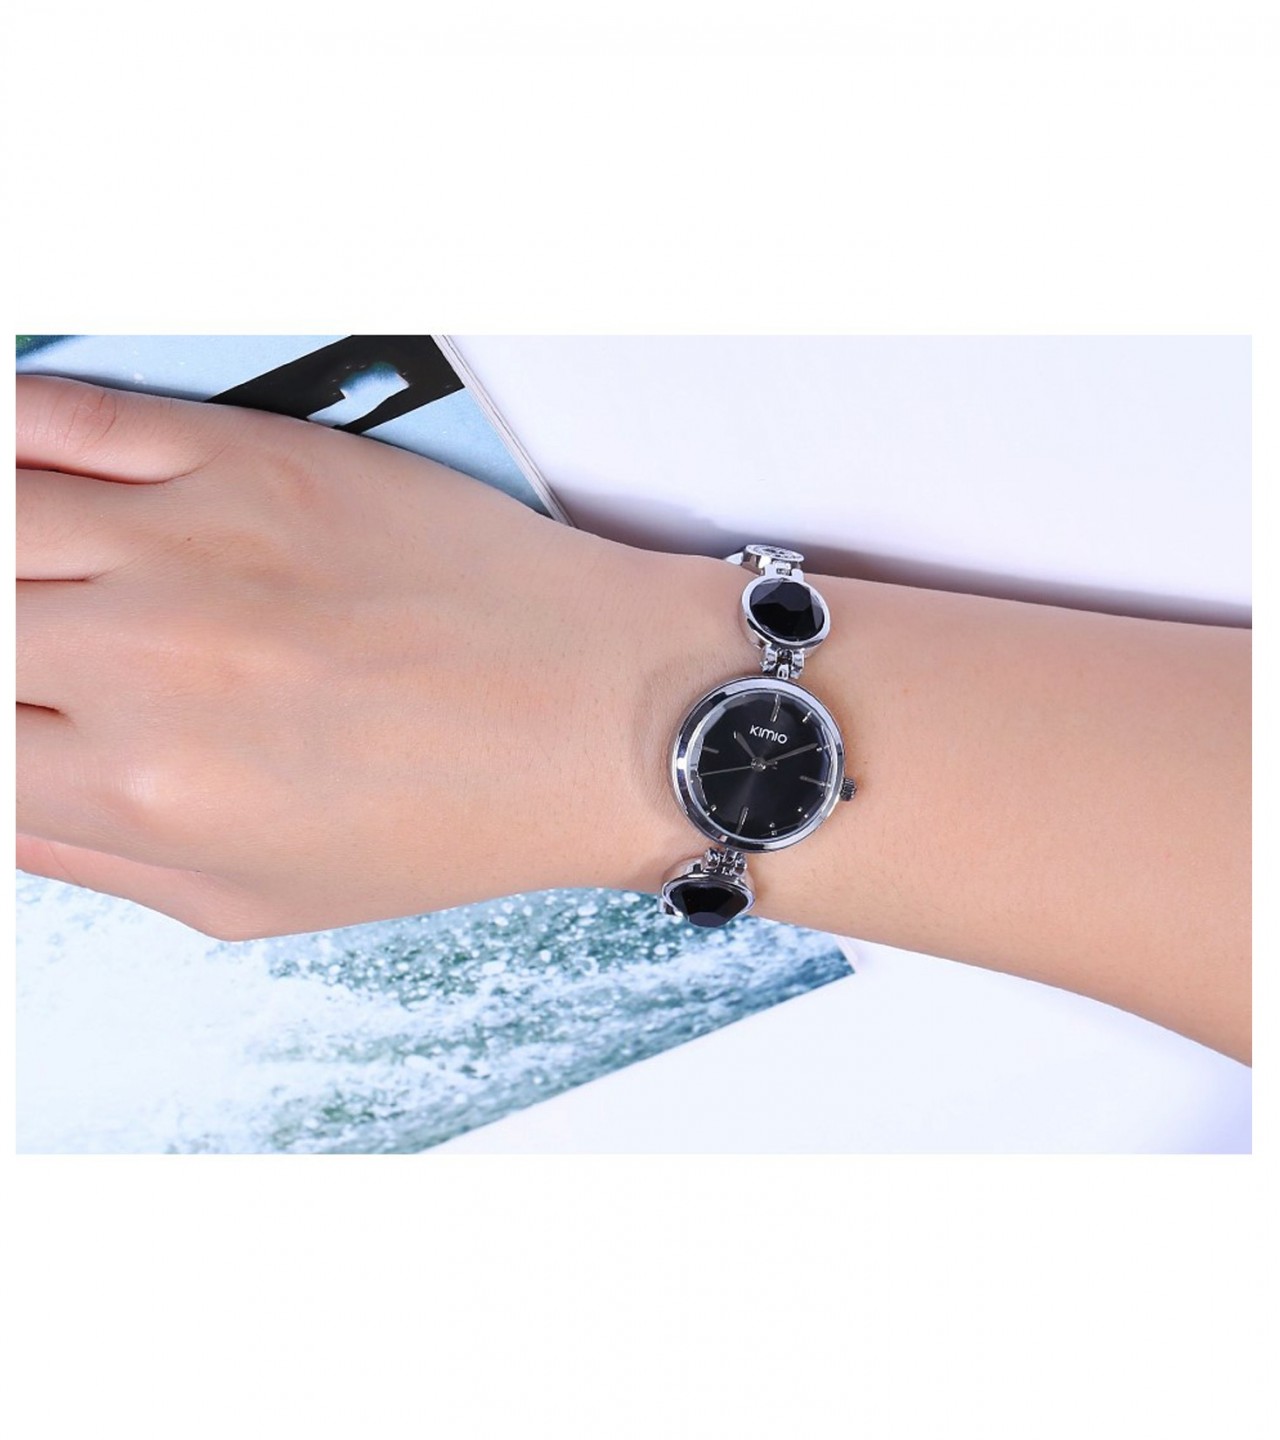 Fashion Crystal Stone Bracelet Watch For Women / Girls - Black